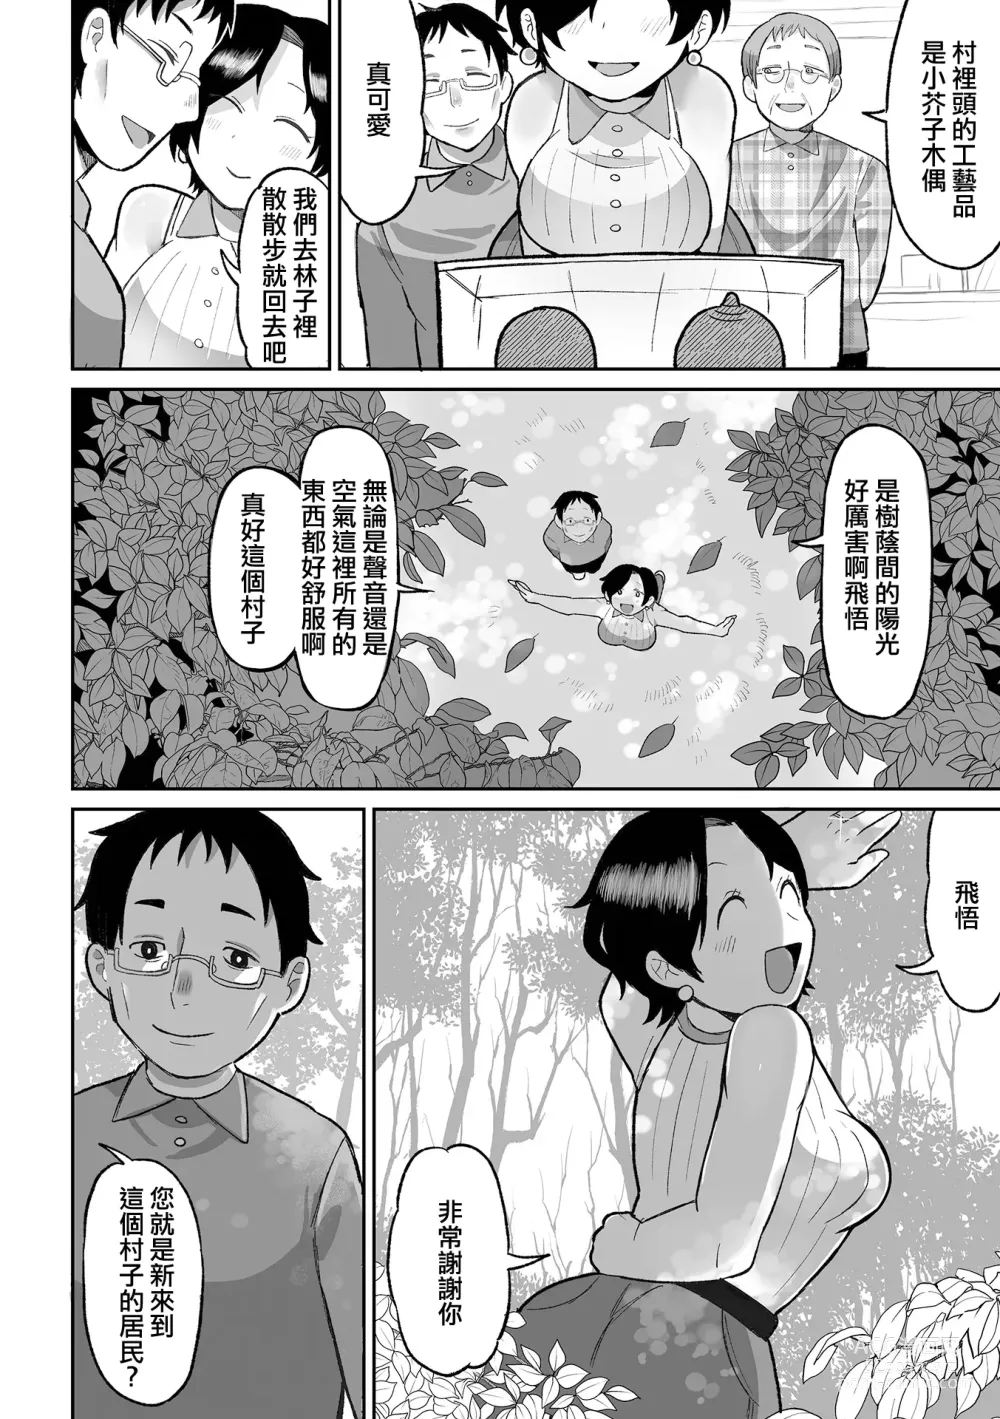 Page 3 of manga 快樂的鄉間生活